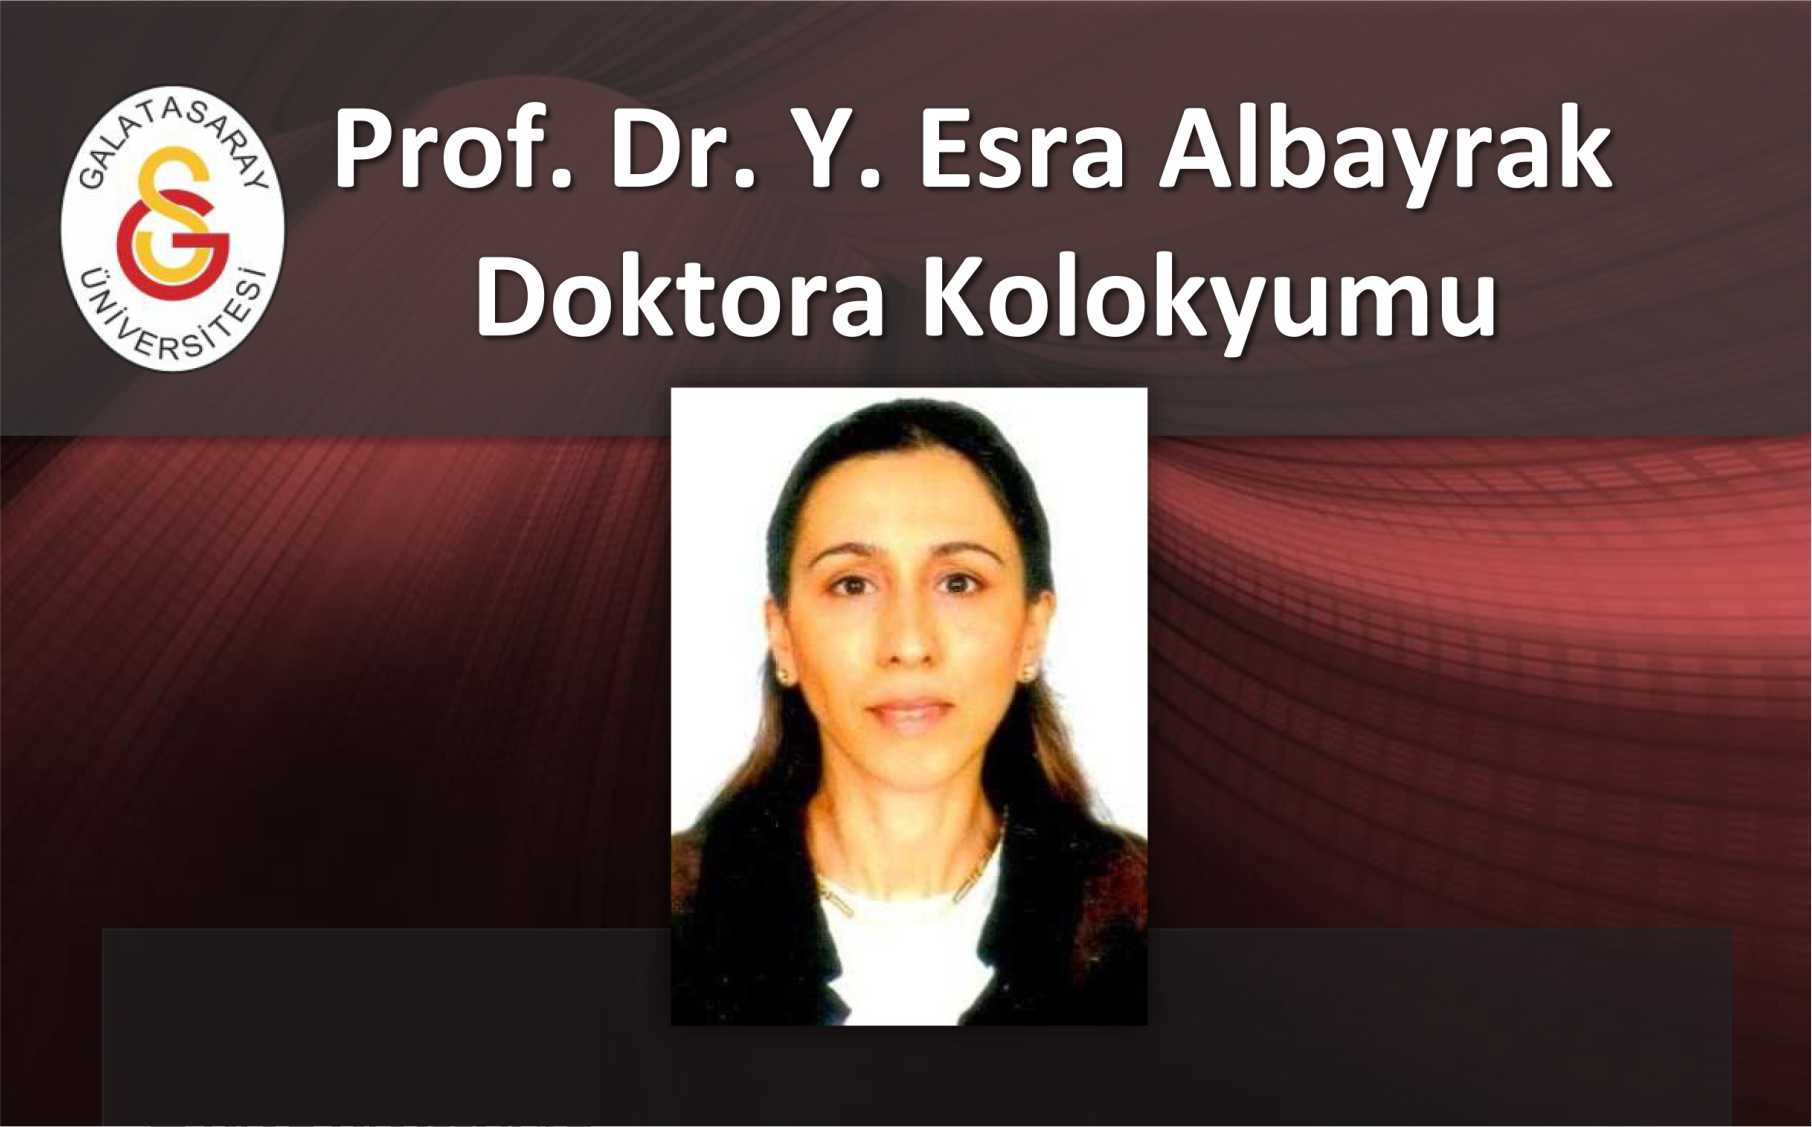 Prof. Dr. Y. Esra Albayrak Doktora Kolokyumu duyuru görseli